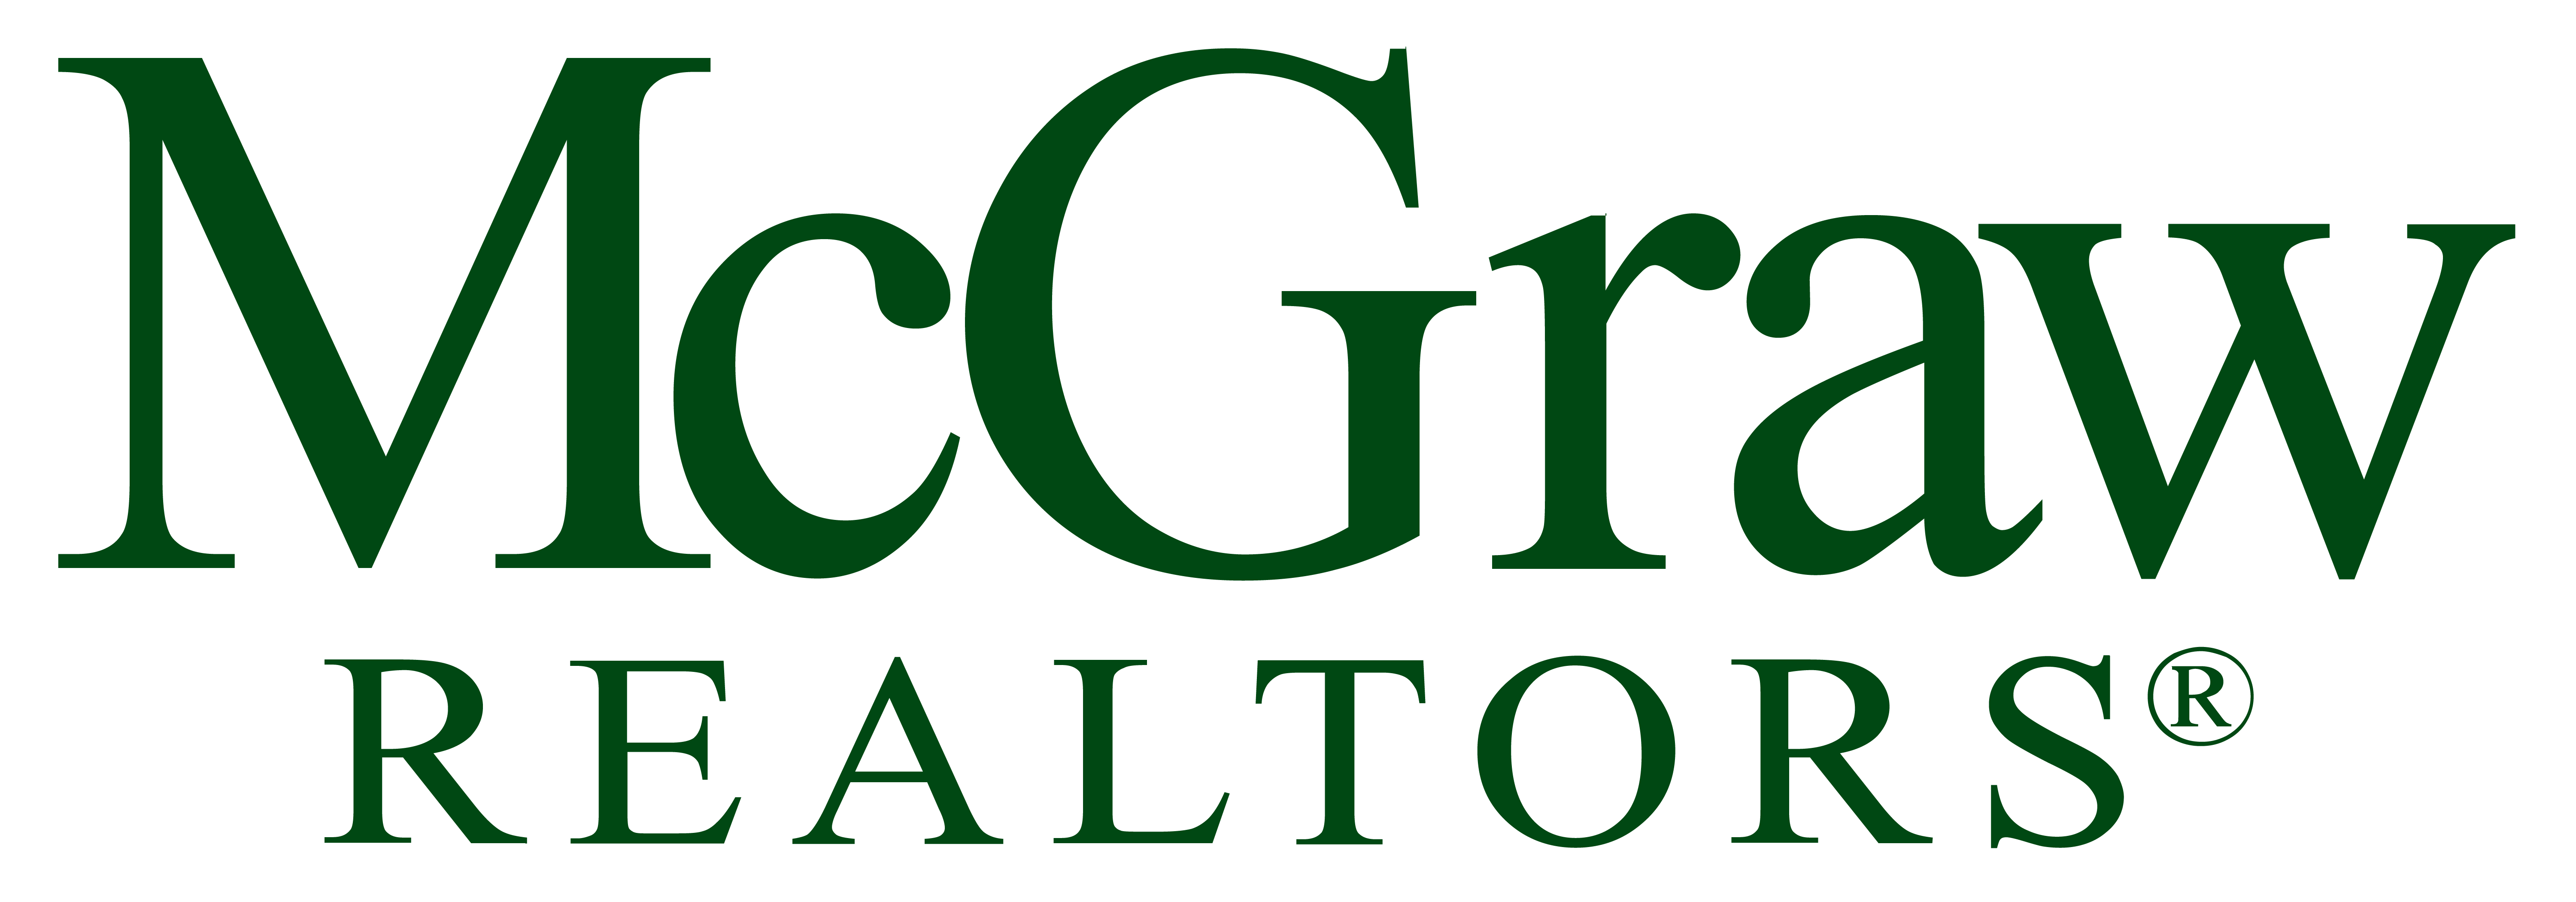 McGraw REALTORS® logo